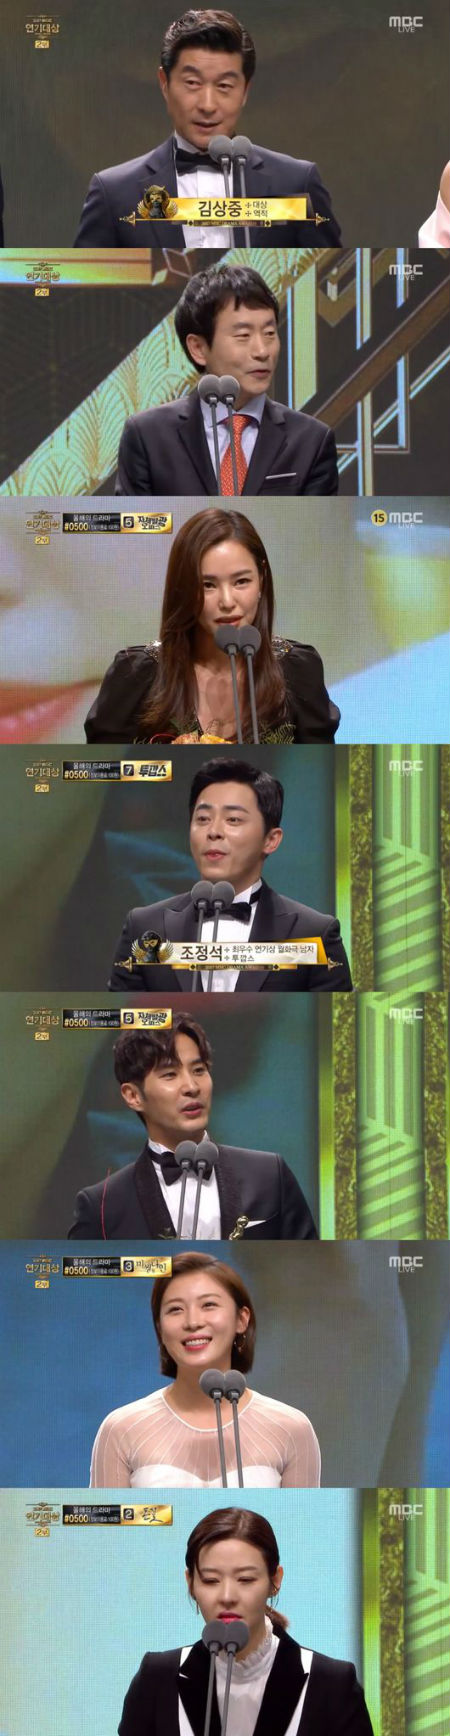 「2017 MBC演技大賞」大賞はキム・サンジュン、「逆賊」が8冠王